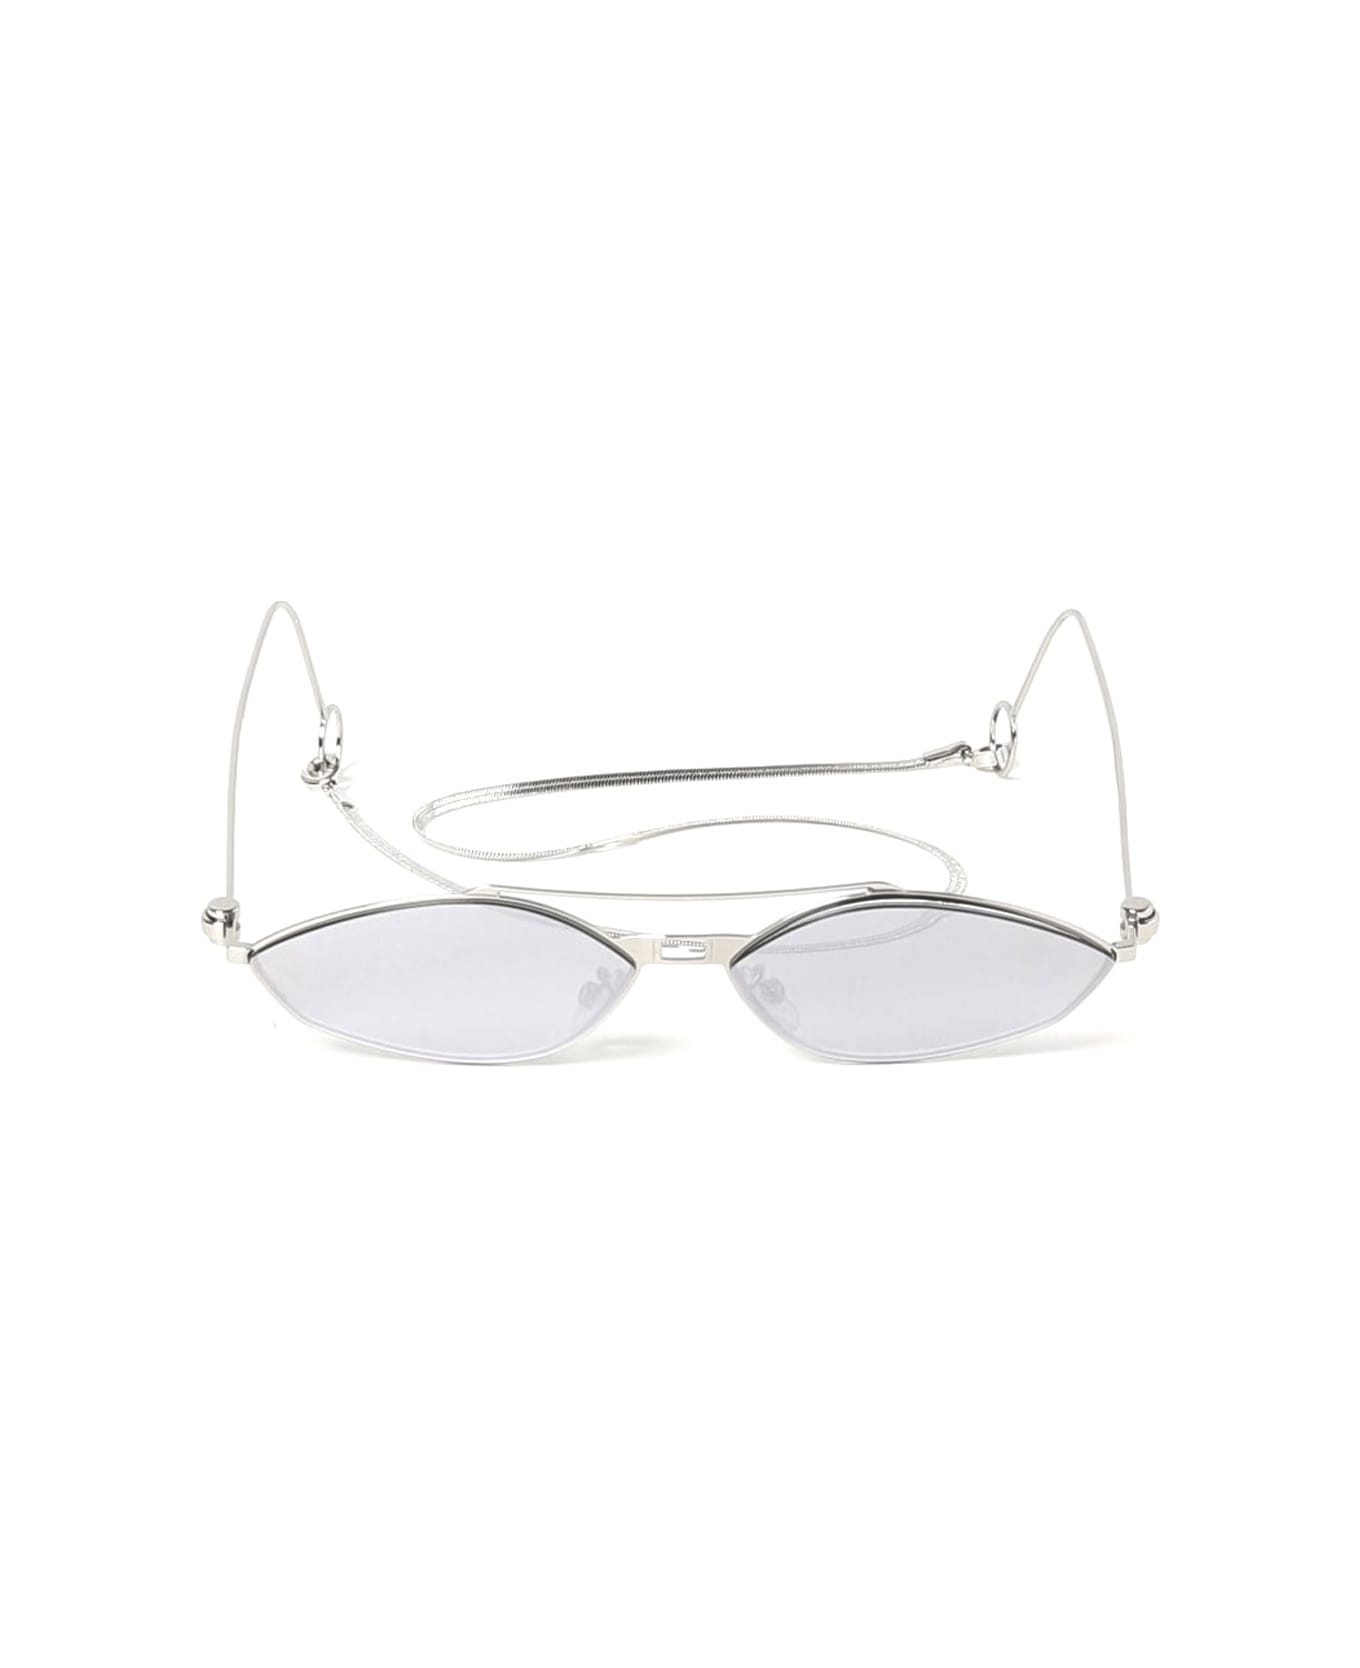 Fendi Eyewear Fe40114u-y 16c Sunglasses - Argento サングラス